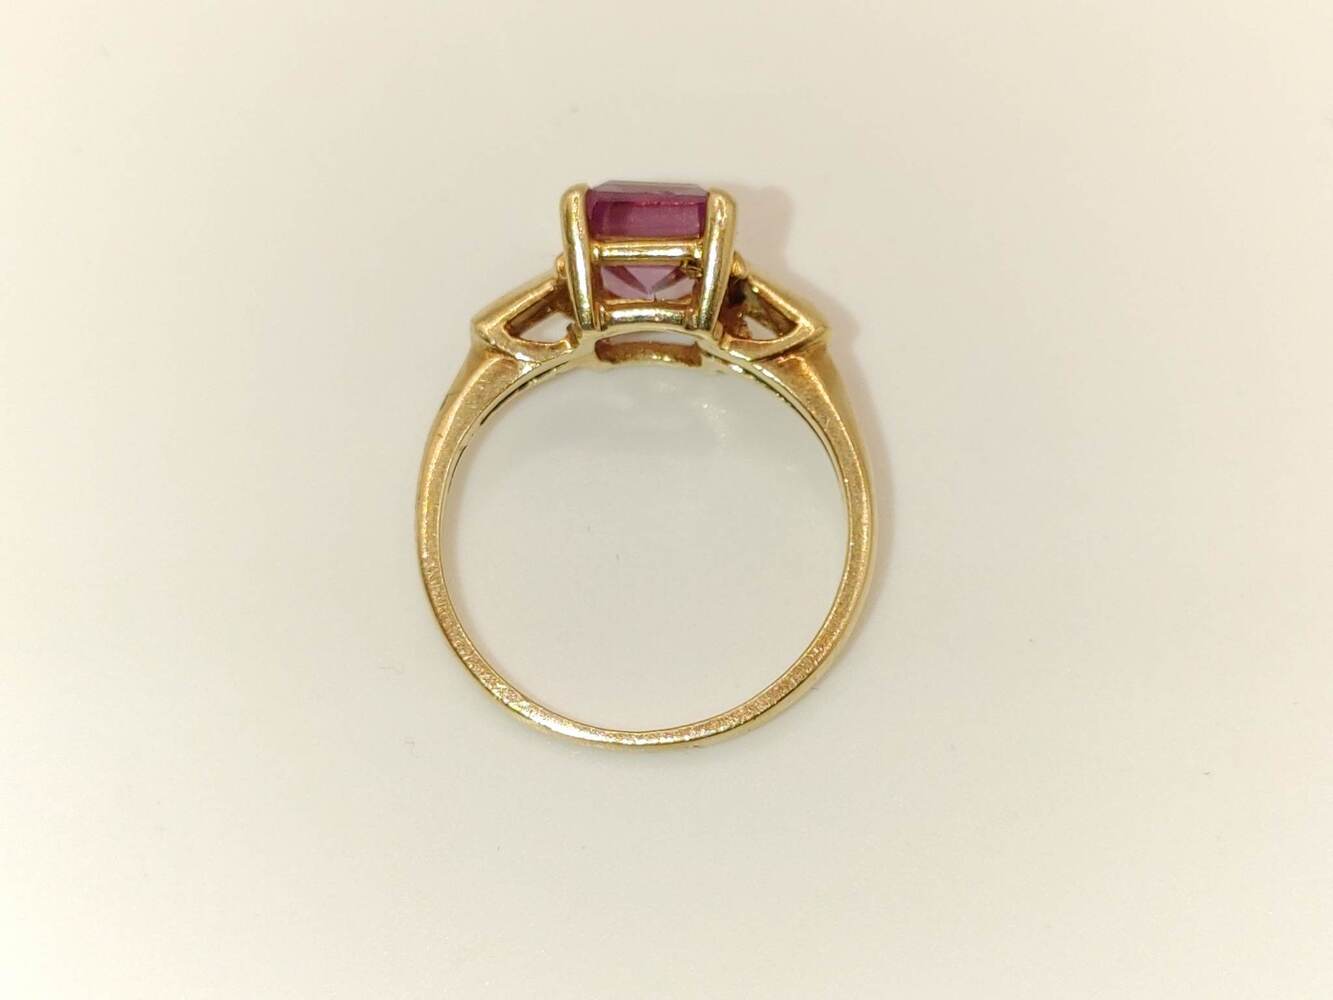 Lady's 10 Karat Yellow Gold Ring with Purple Stone